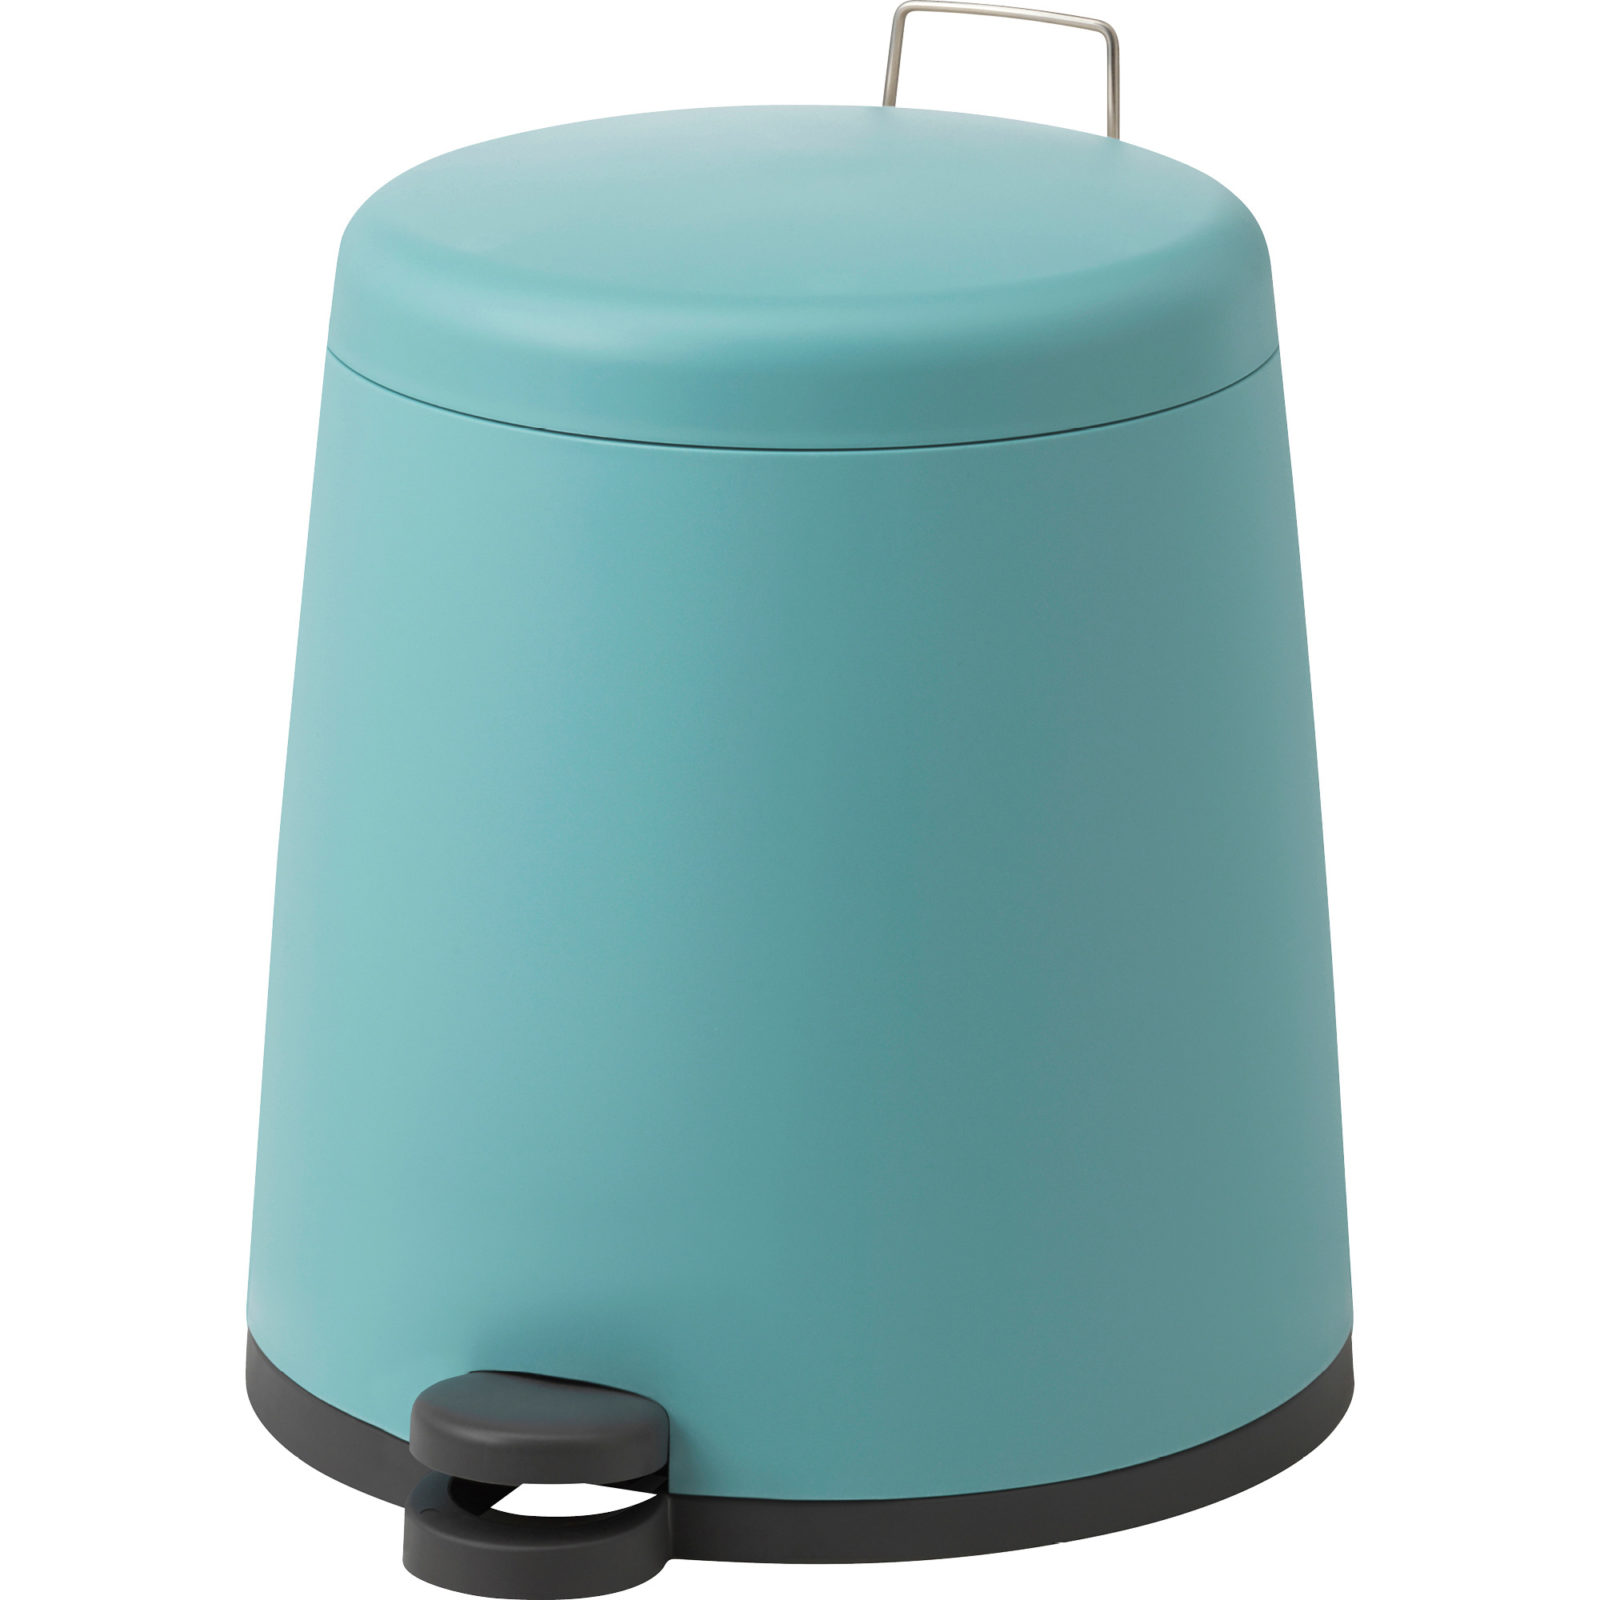 Blue pedal bin with a chrome coloured handle, SNÄPP.